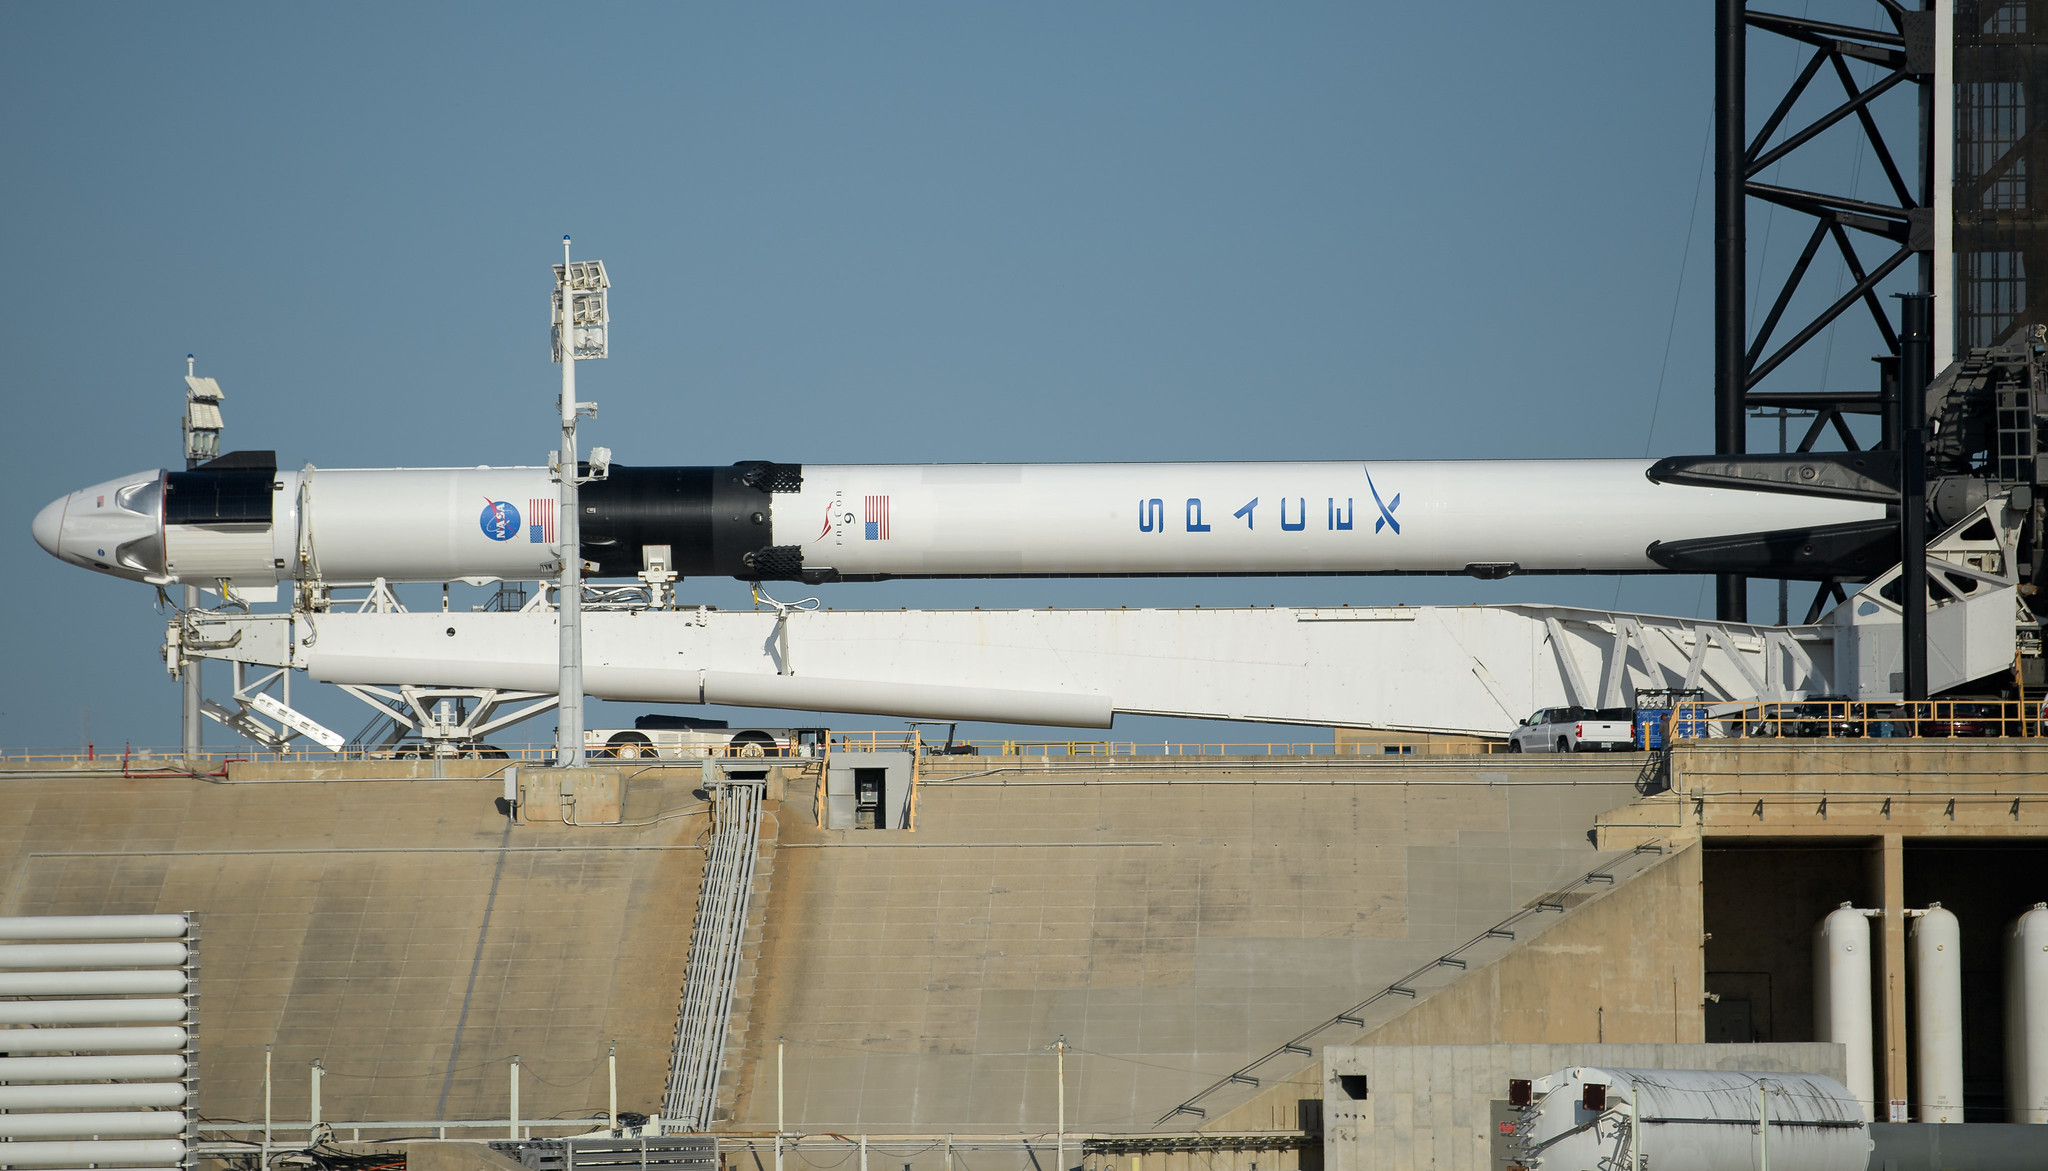 https://www.europafm.ro/wp-content/uploads/2020/05/Pregatire-lansare-SpaceX-Demo-2-27-mai-2020-FOTO-NASA-16.jpg